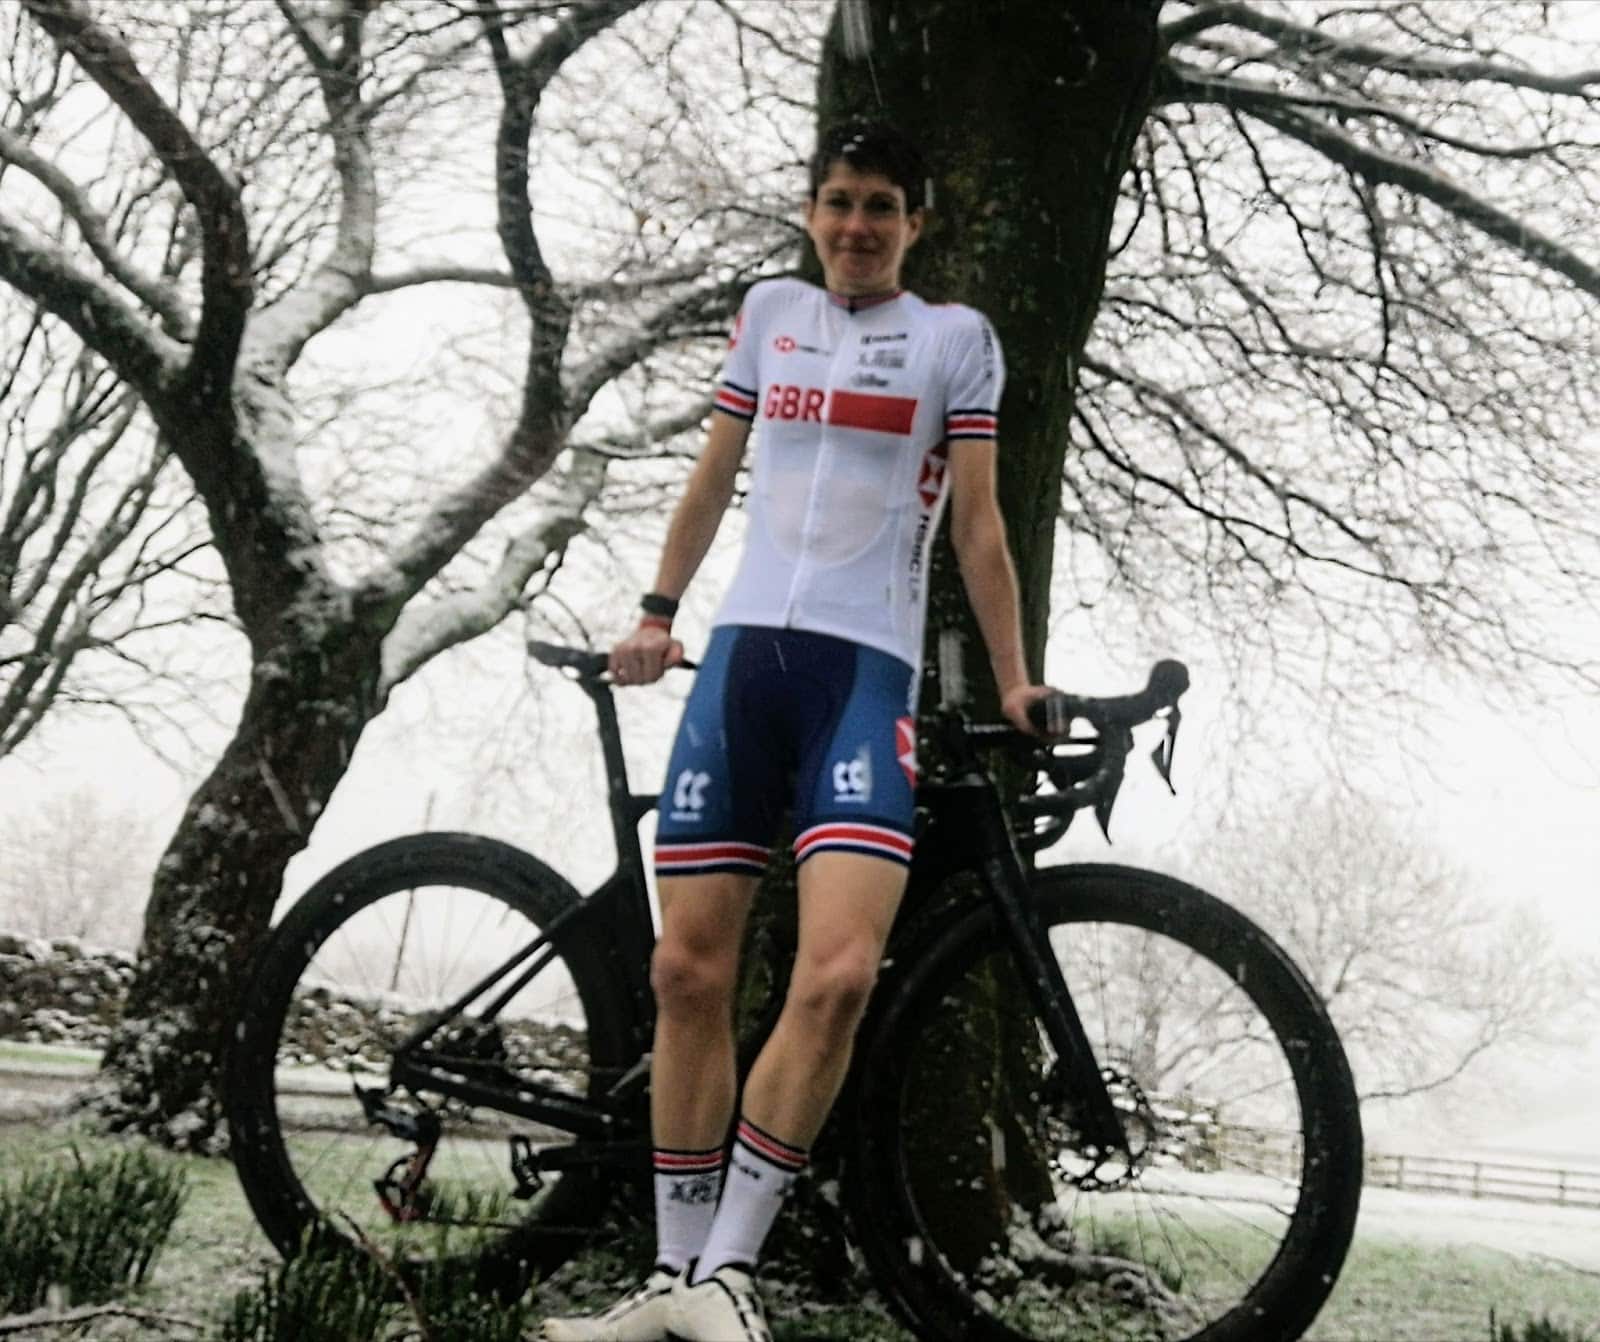 British pro cyclist Mary Wilkinson